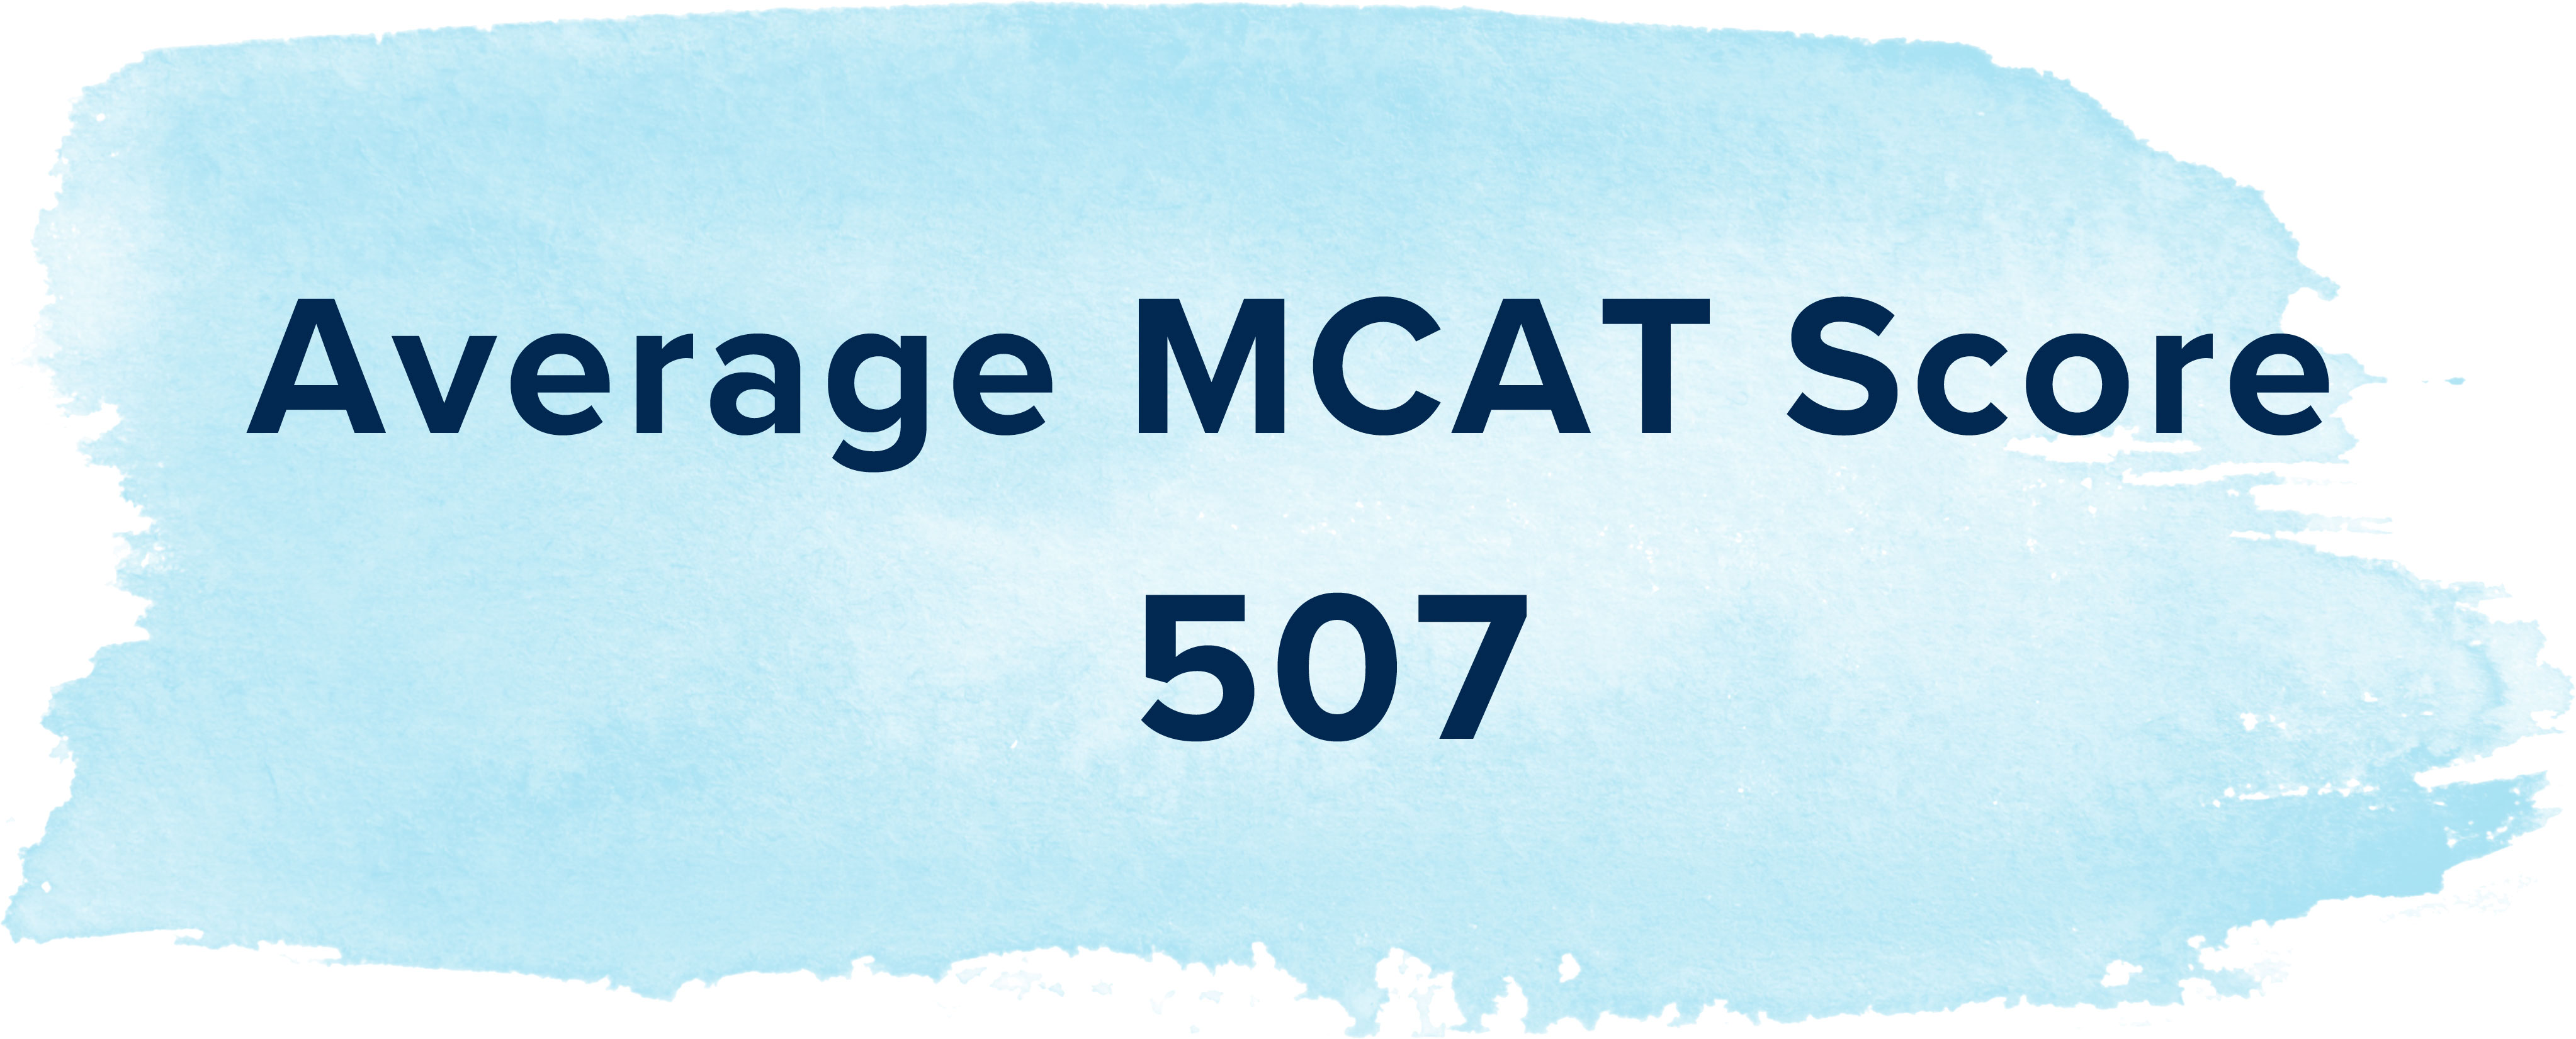 Average MCAT SCore 507